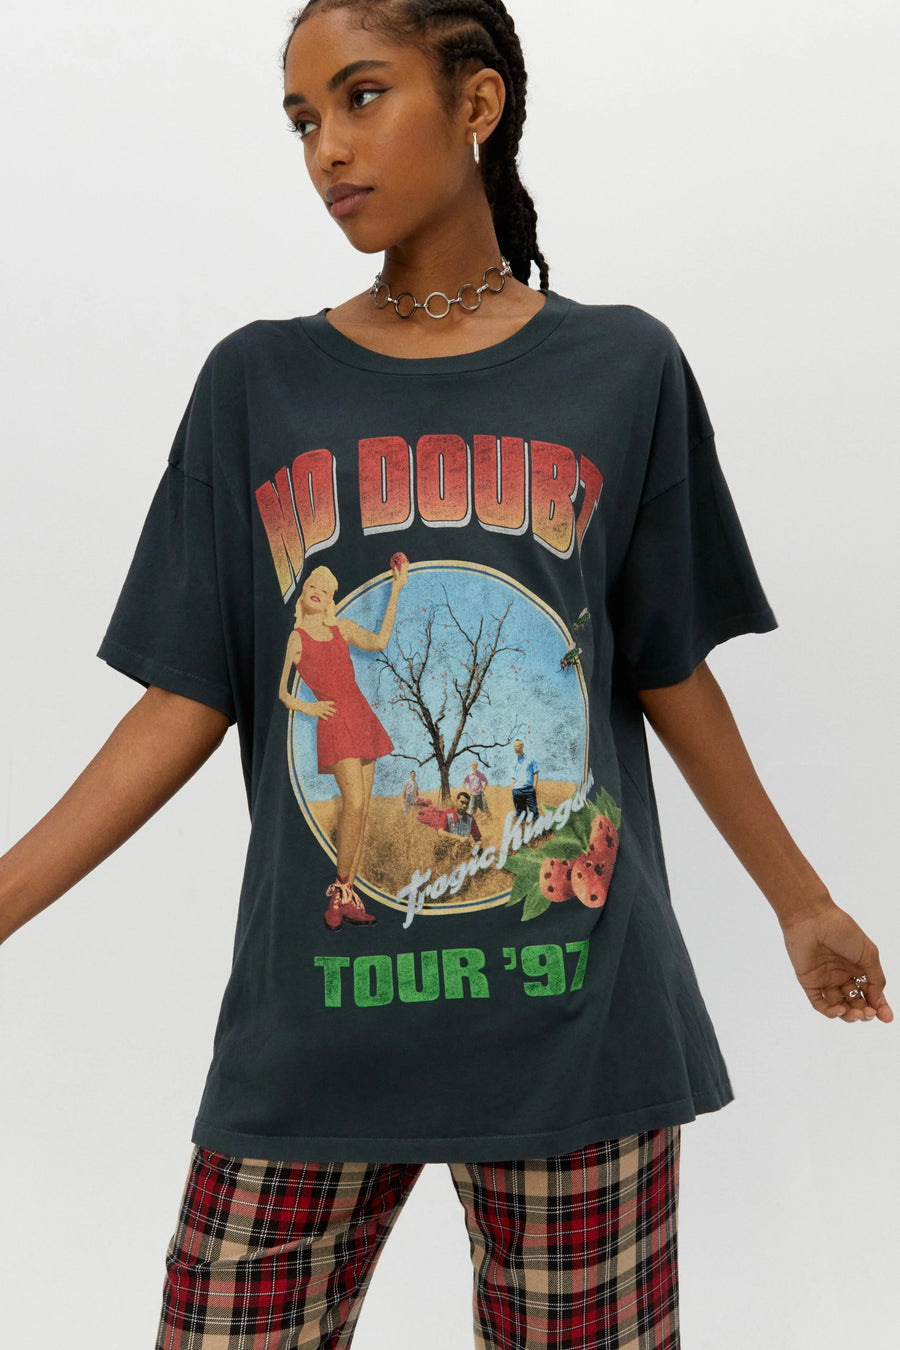 Daydreamer No Doubt Tour 97 Merch Tee - Vintage Black